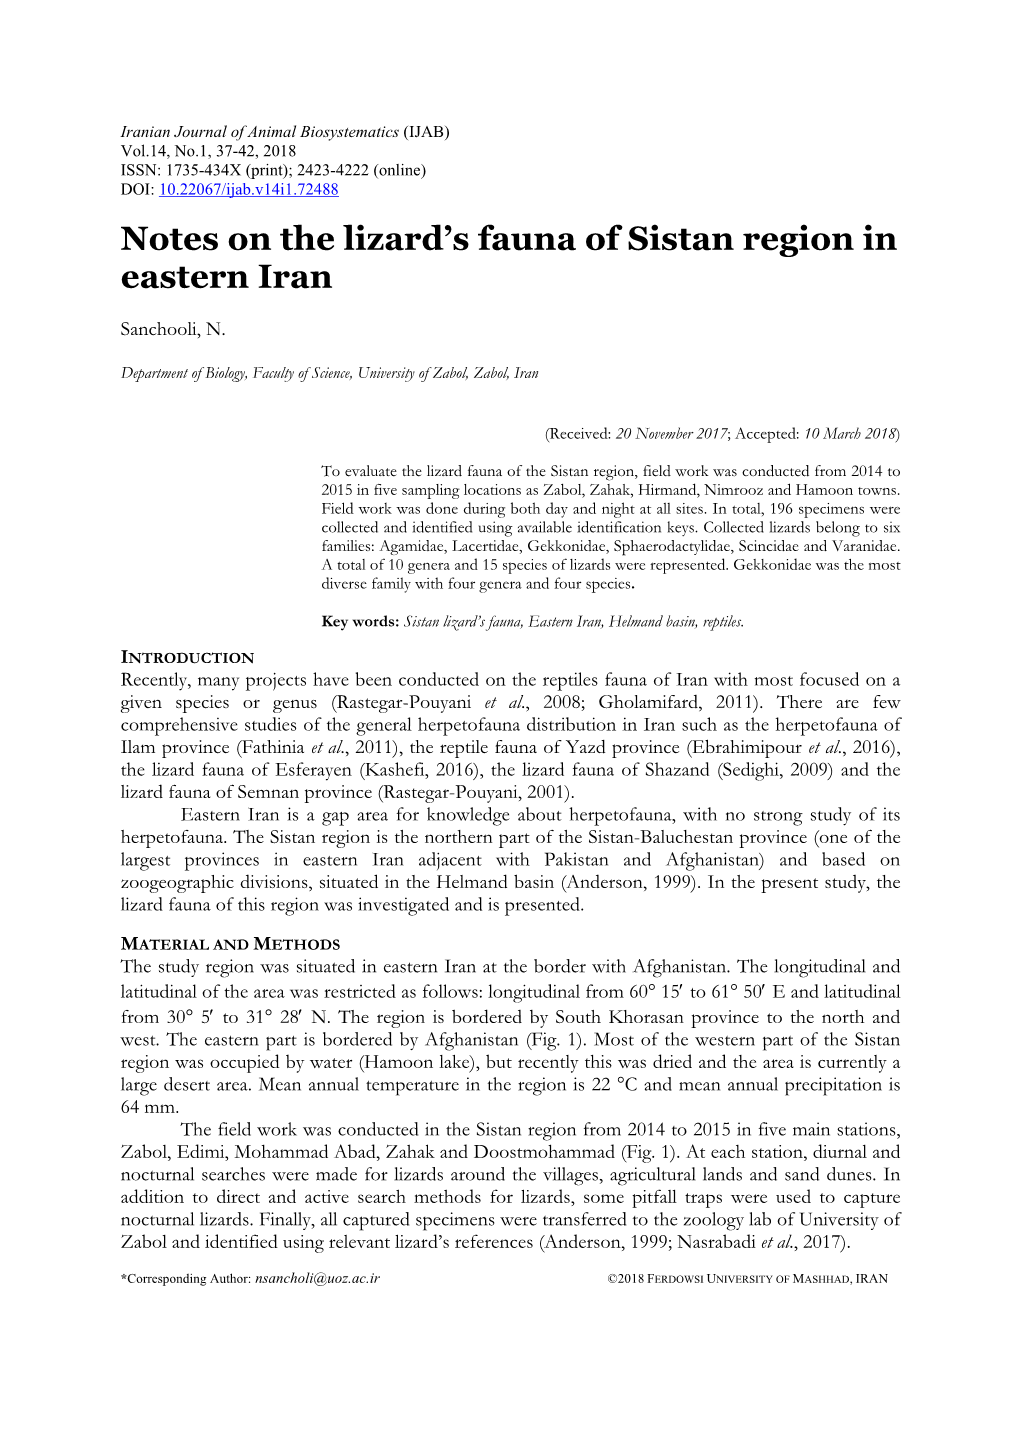 Notes on the Lizard's Fauna of Sistan Region in Eastern Iran